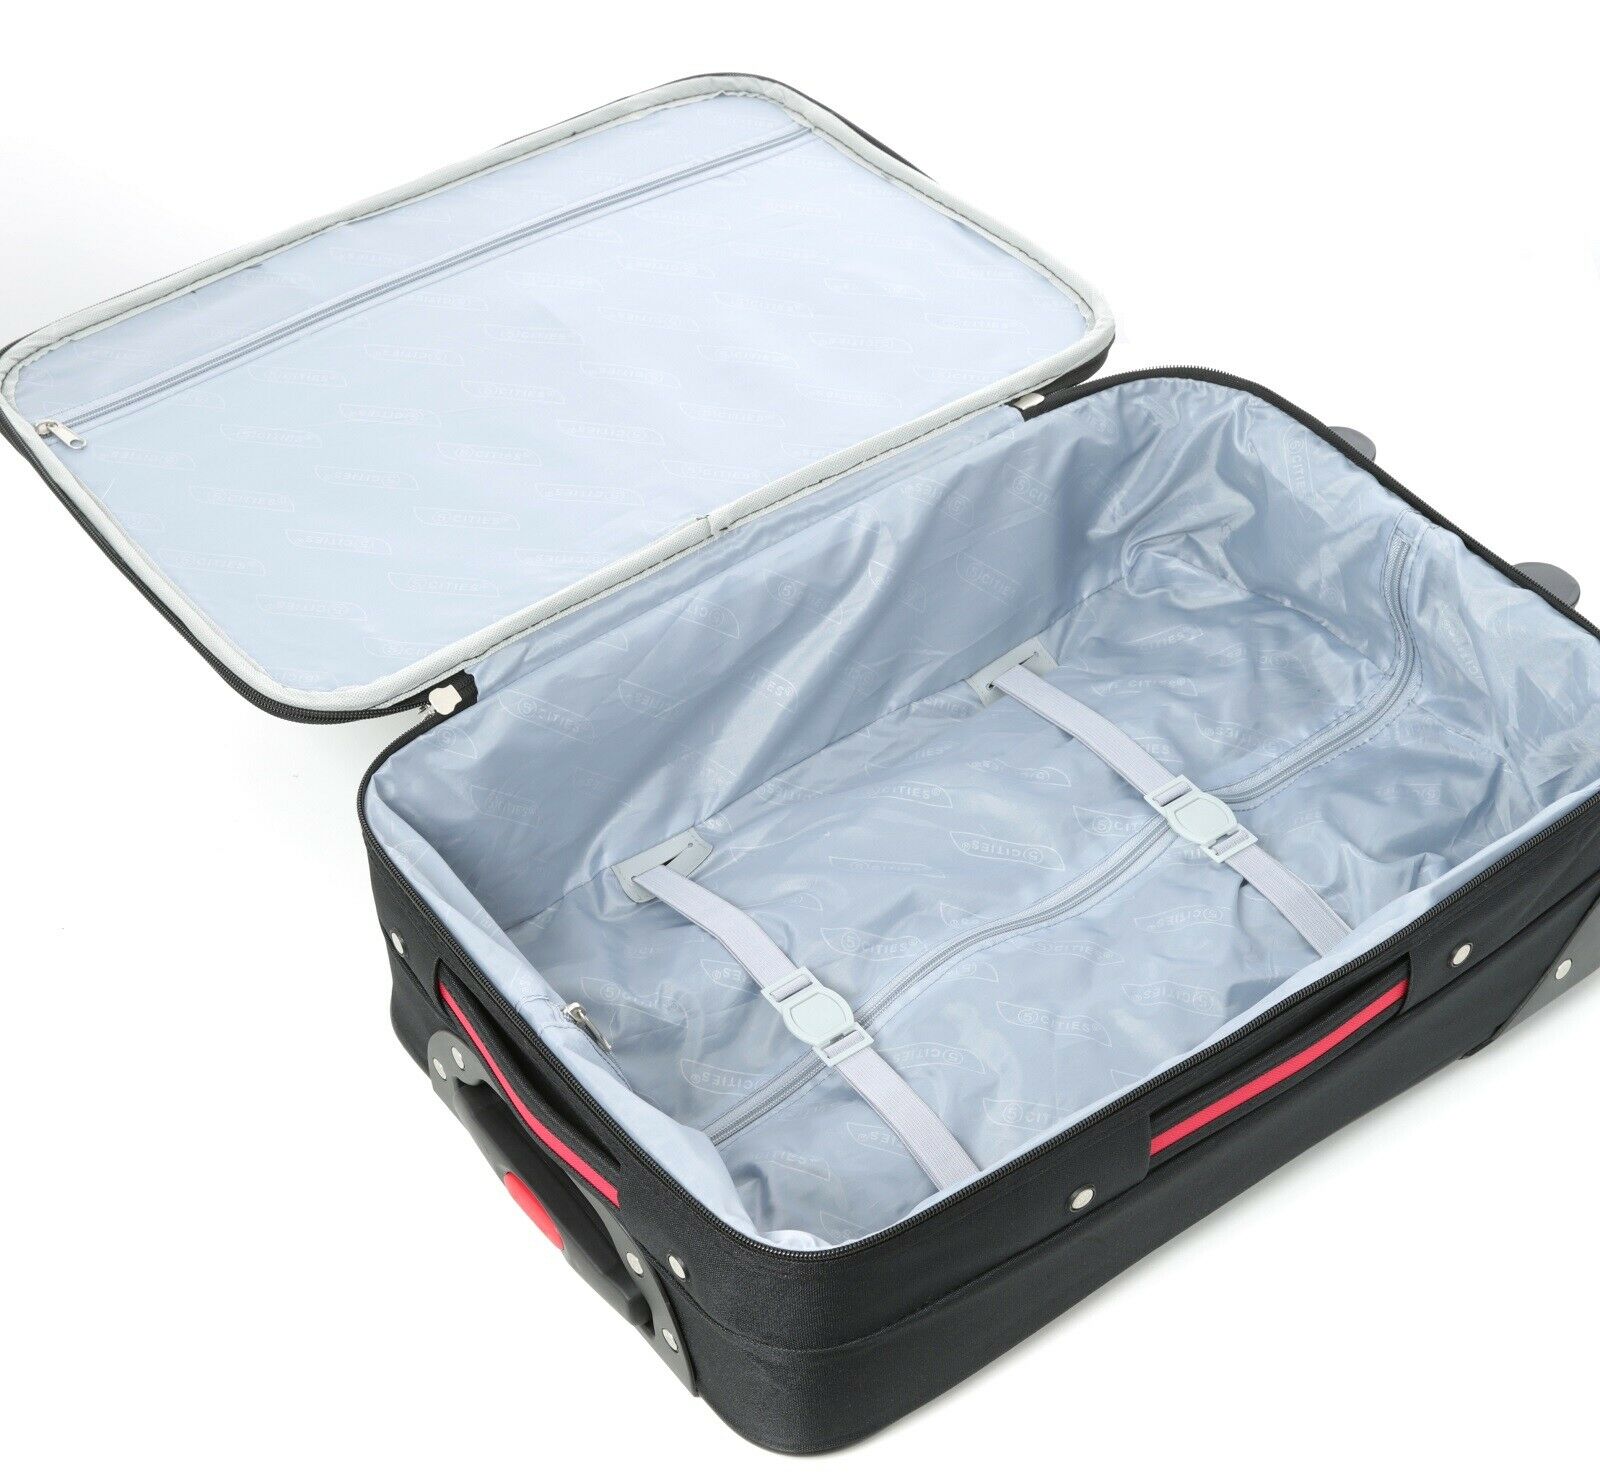 5 Cities Lightweight 3 Piece Suitcase Luggage Set Cabin + Medium + Large Hold